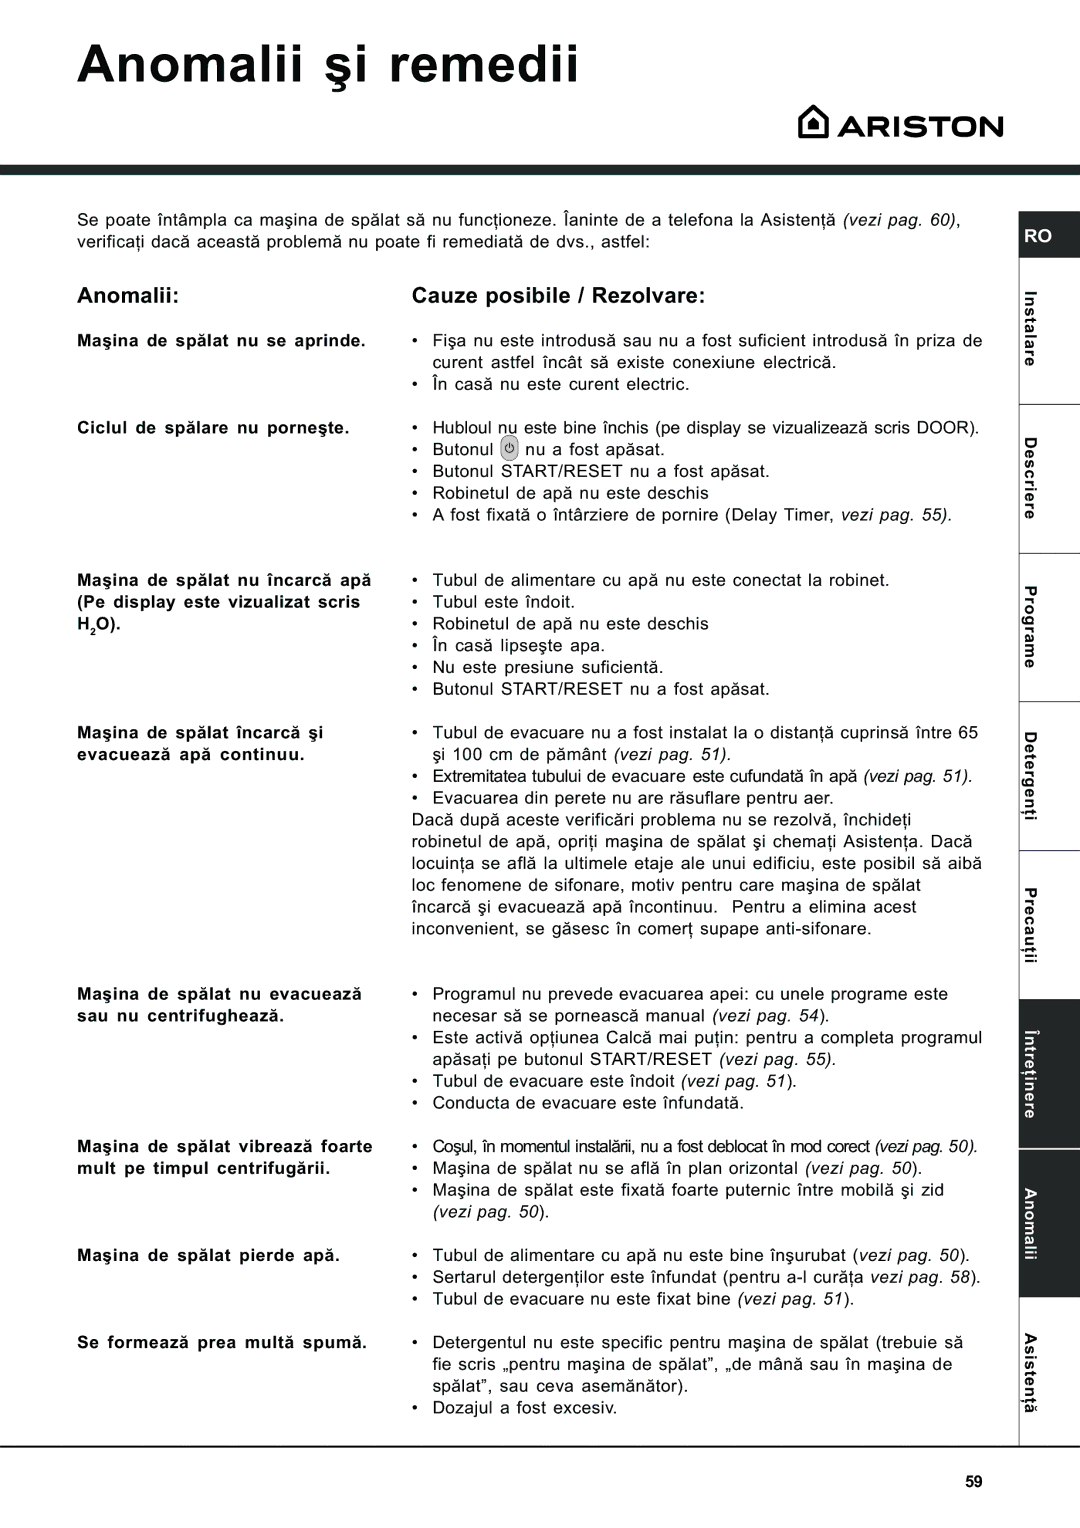 Ariston AVSD 109 manual Anomalii ºi remedii, Anomalii Cauze posibile / Rezolvare 